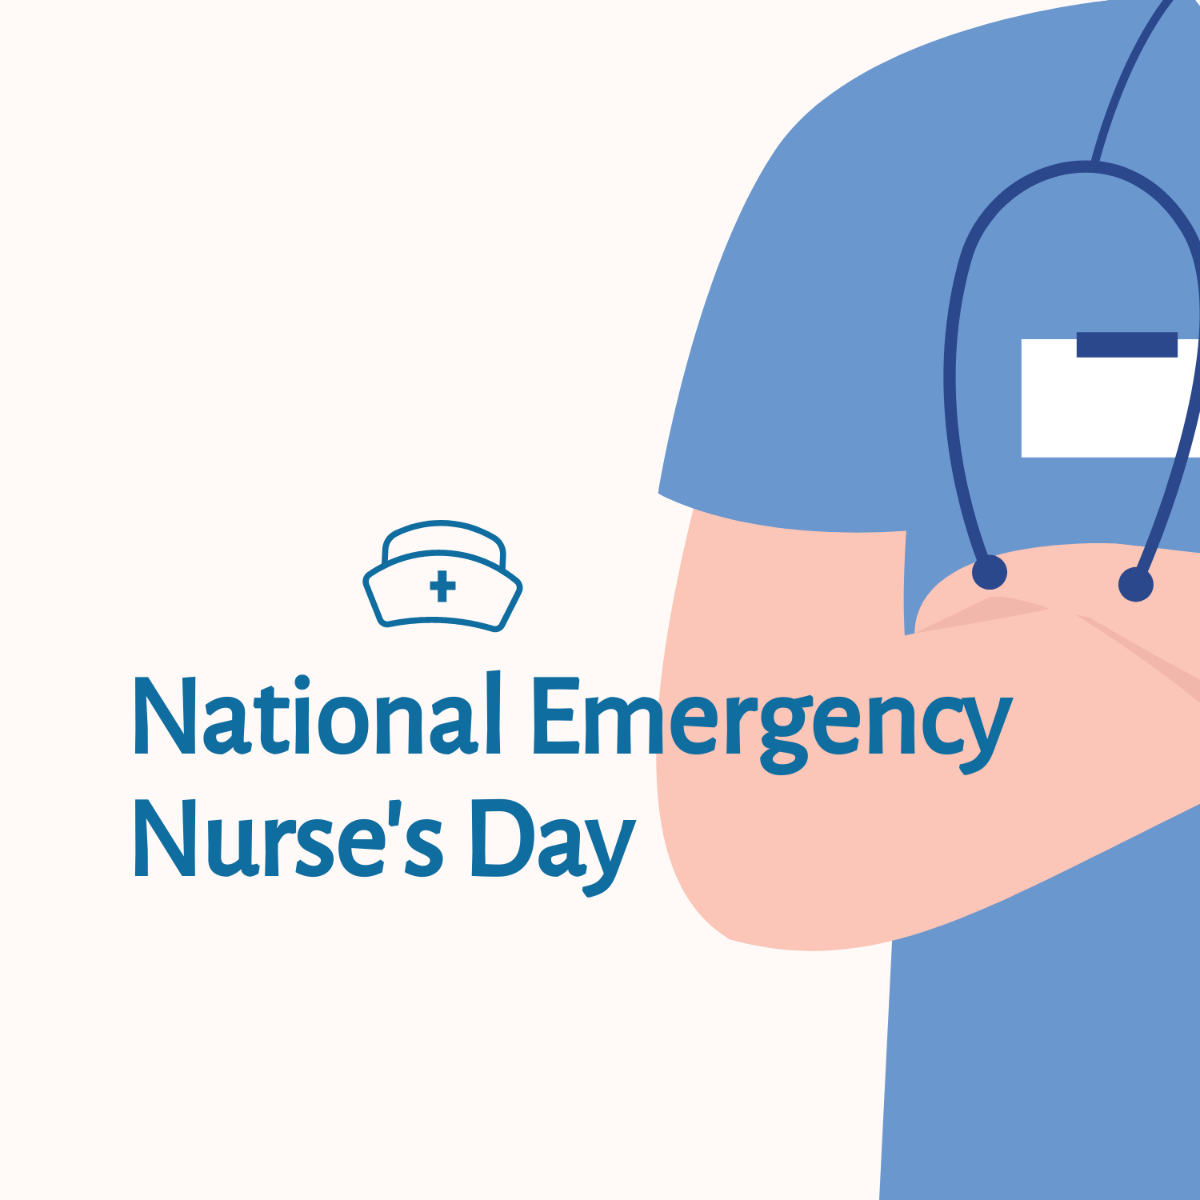 Free National Emergency Nurse's Day Illustration Template